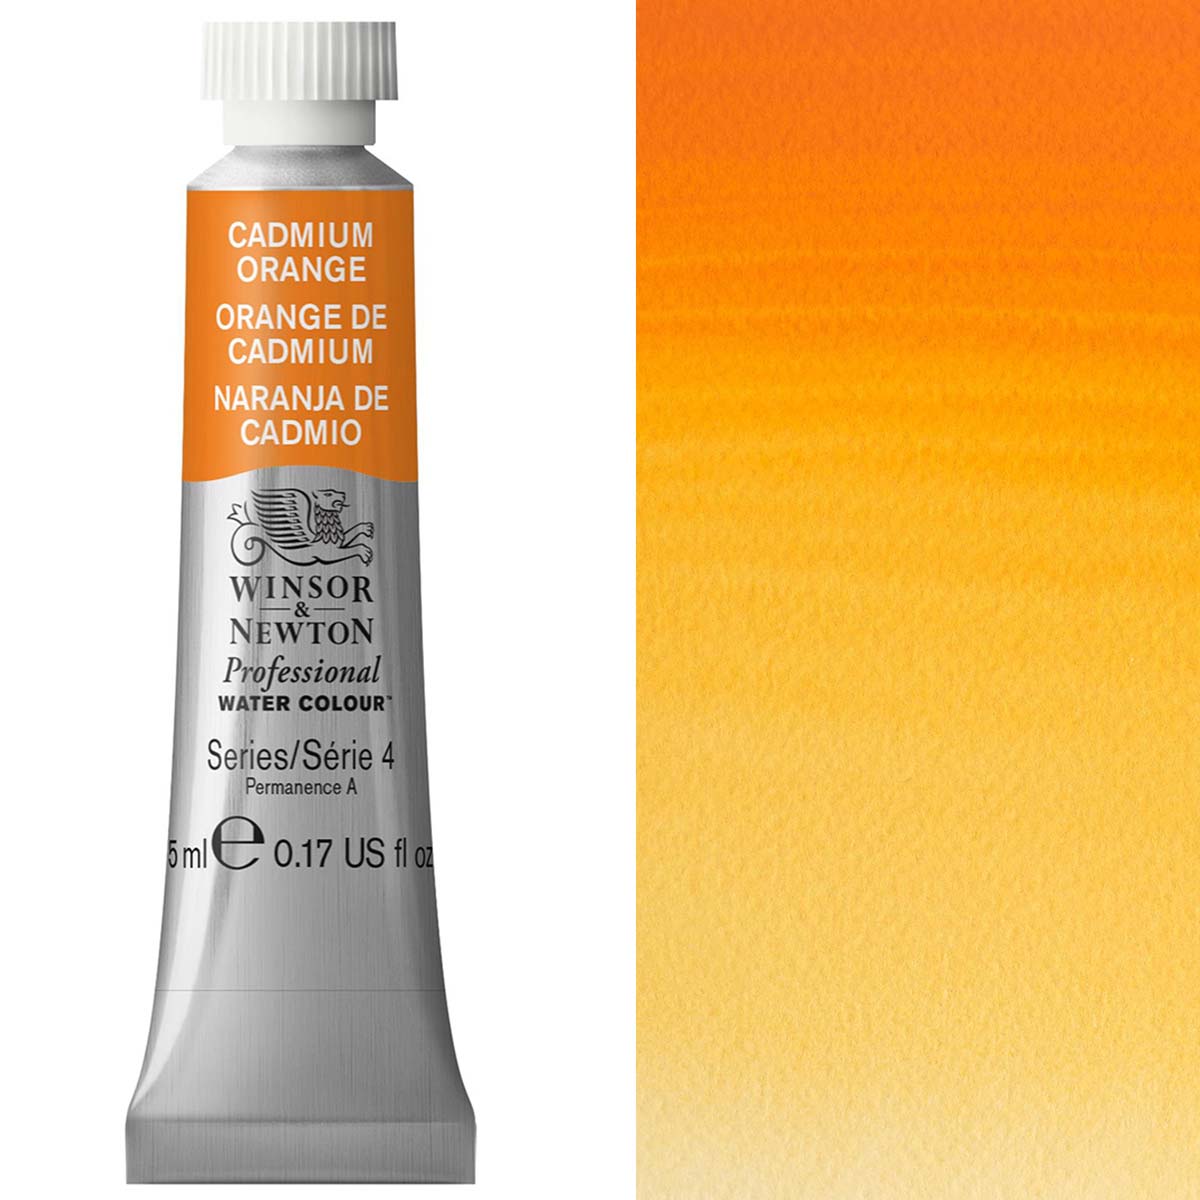 Winsor et Newton - Aquarelle des artistes professionnels - 5 ml - Cadmium Orange